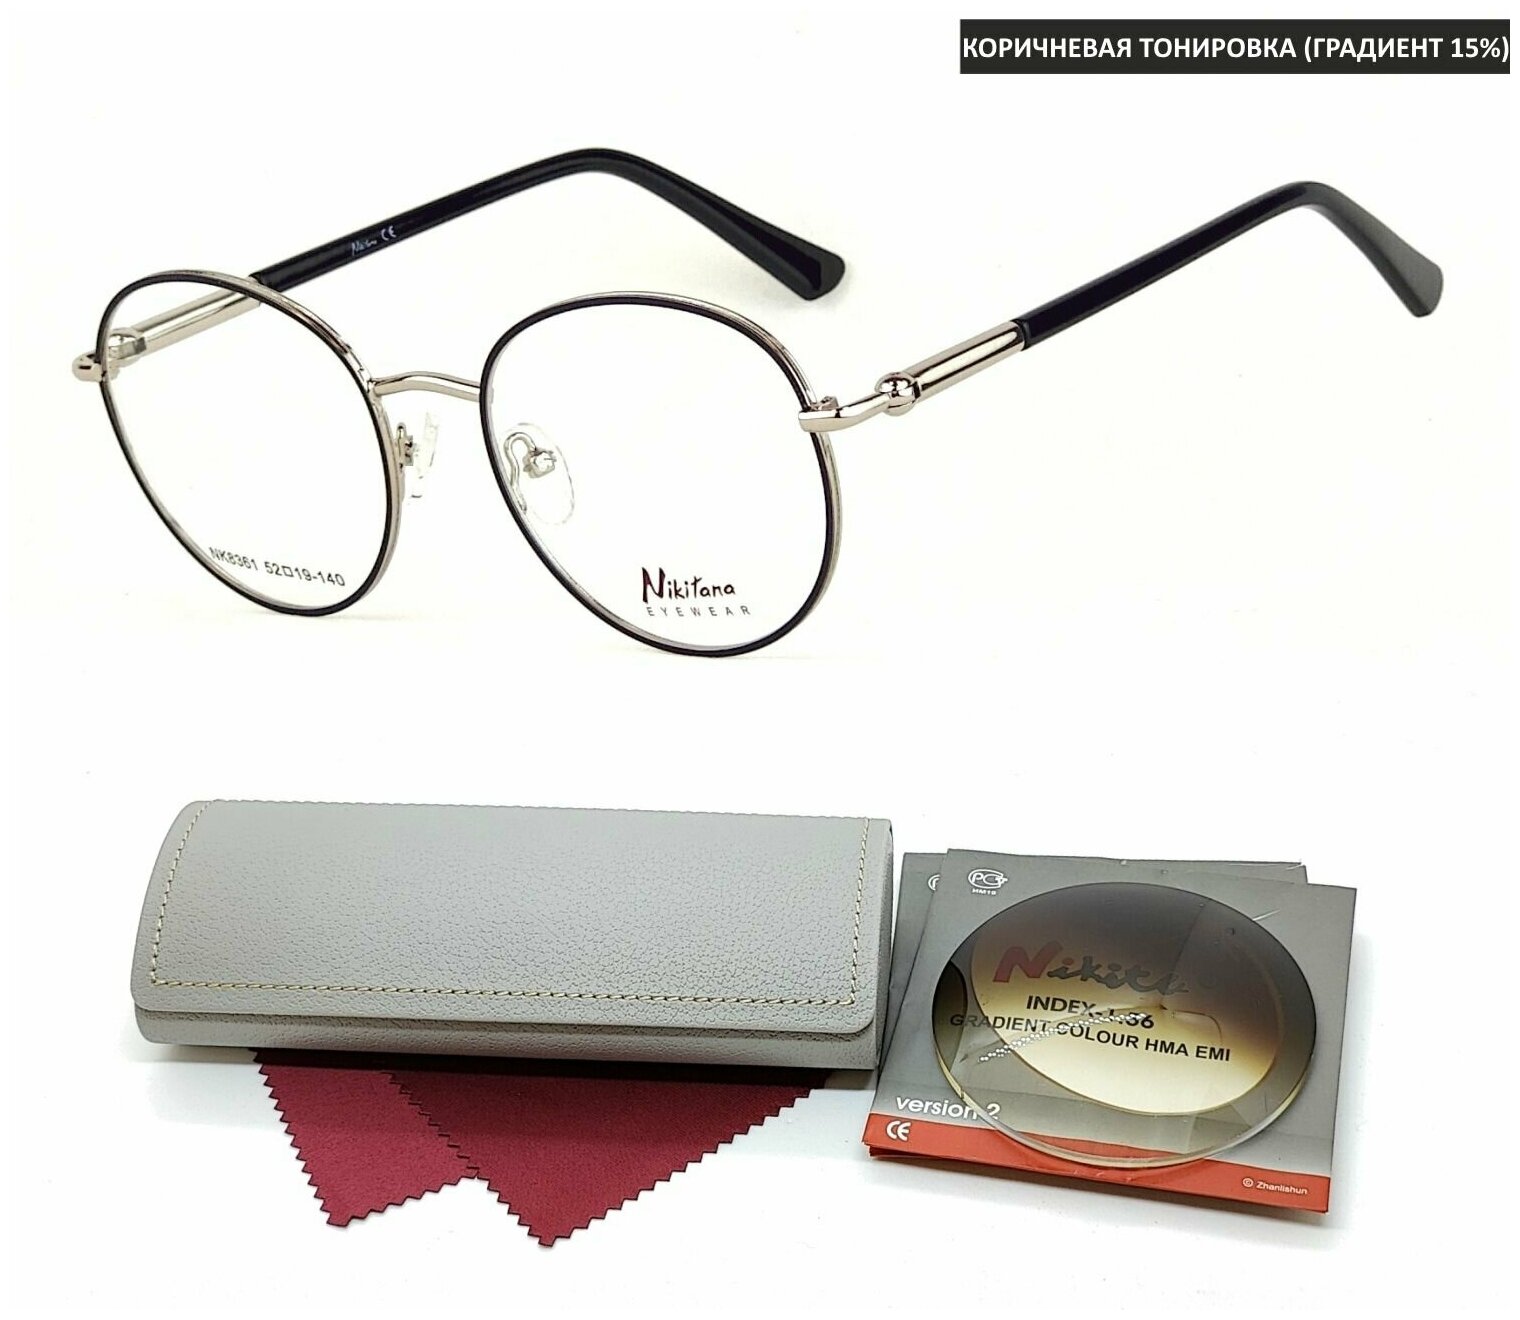 Тонированные очки с футляром на магните NIKITANA мод. 8361 Цвет 6 с линзами NIKITA 1.56 GRADIENT BROWN, HMA/EMI -1.00 РЦ 58-60